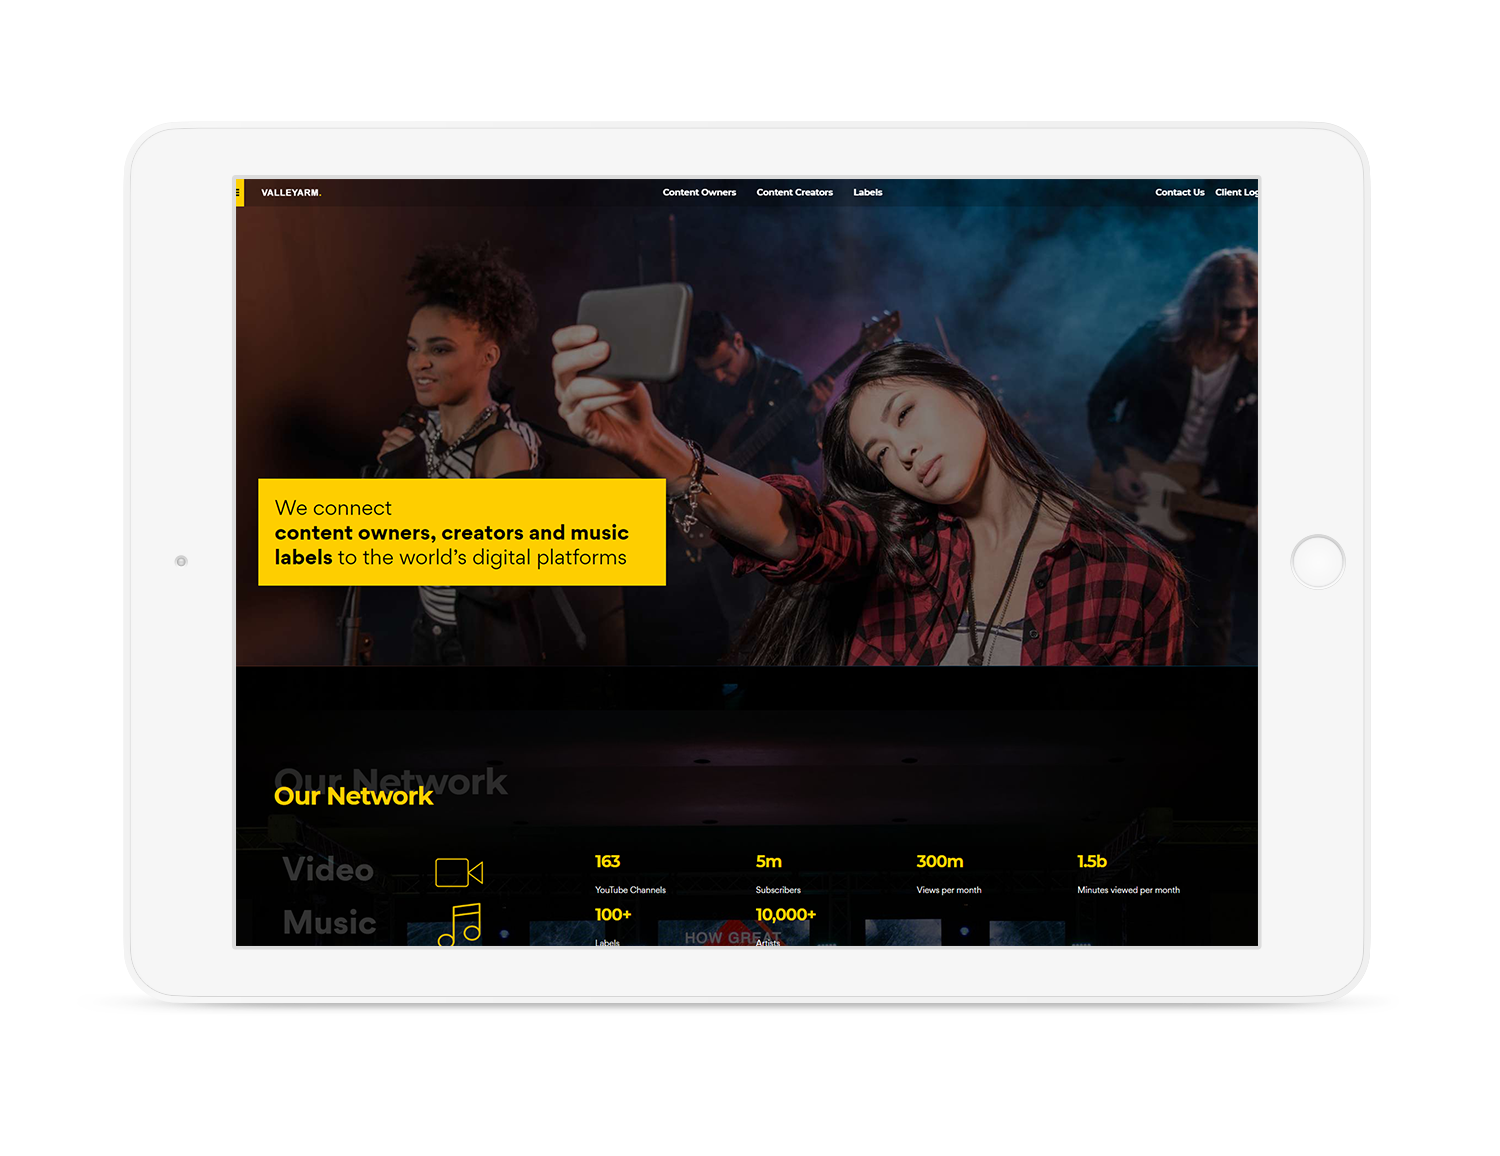 SEO Services | Digital Marketing Agency | Website Design Services | 28k